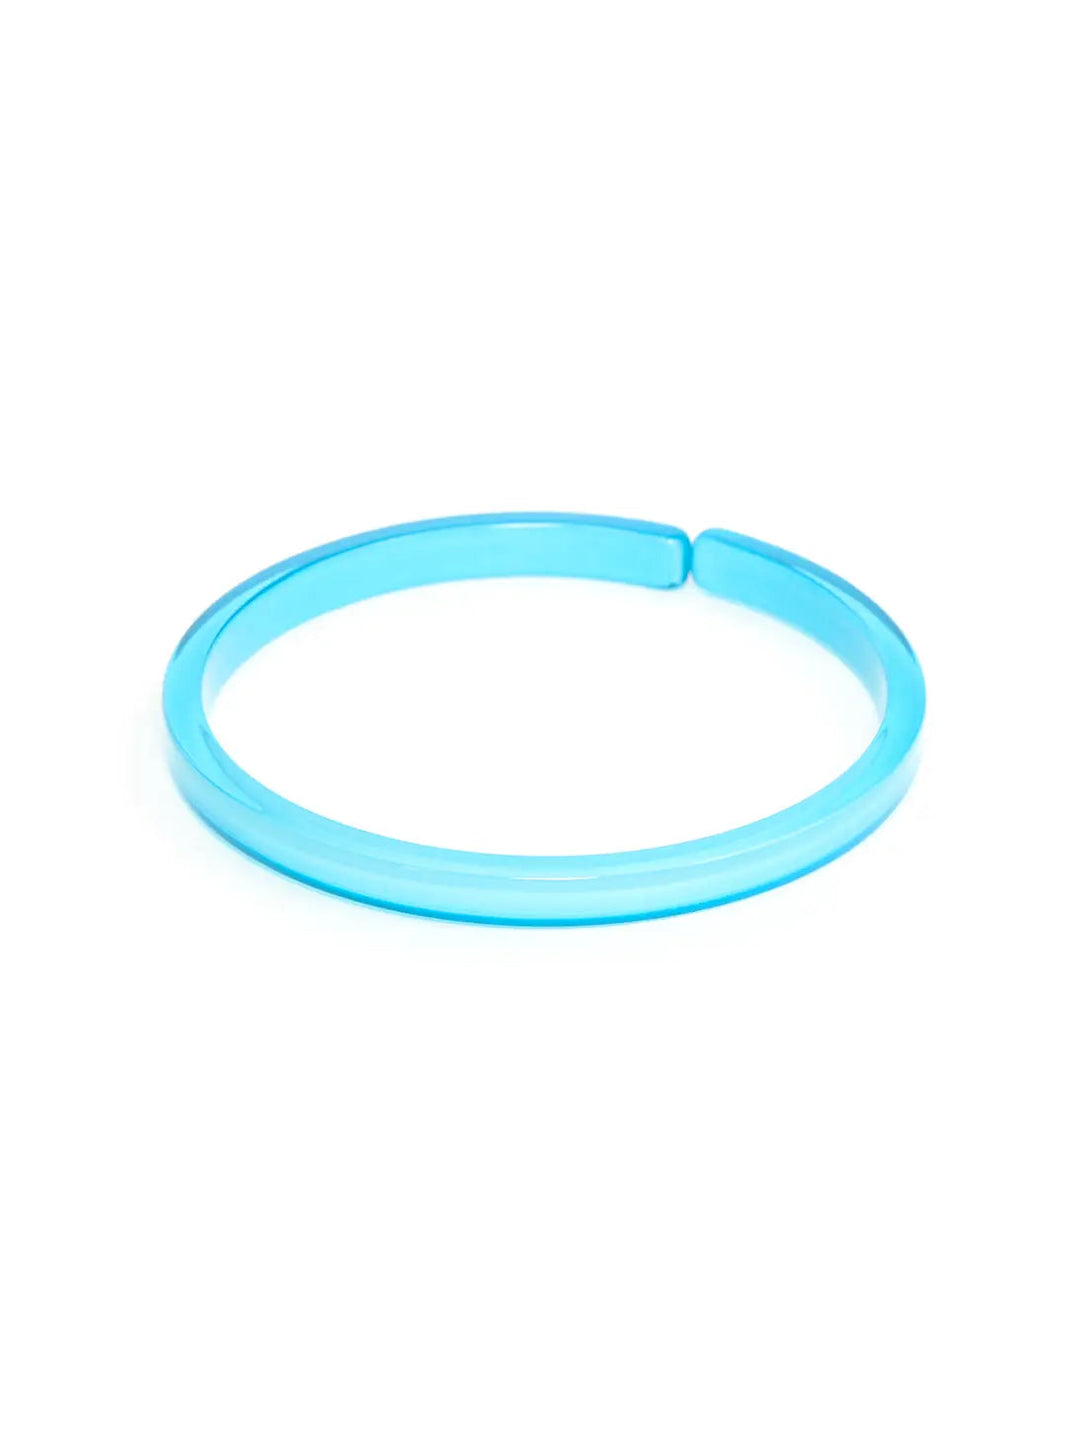 Love Stack Acrylic Bracelets Bracelet Zenzii Jewelry Bright Blue 